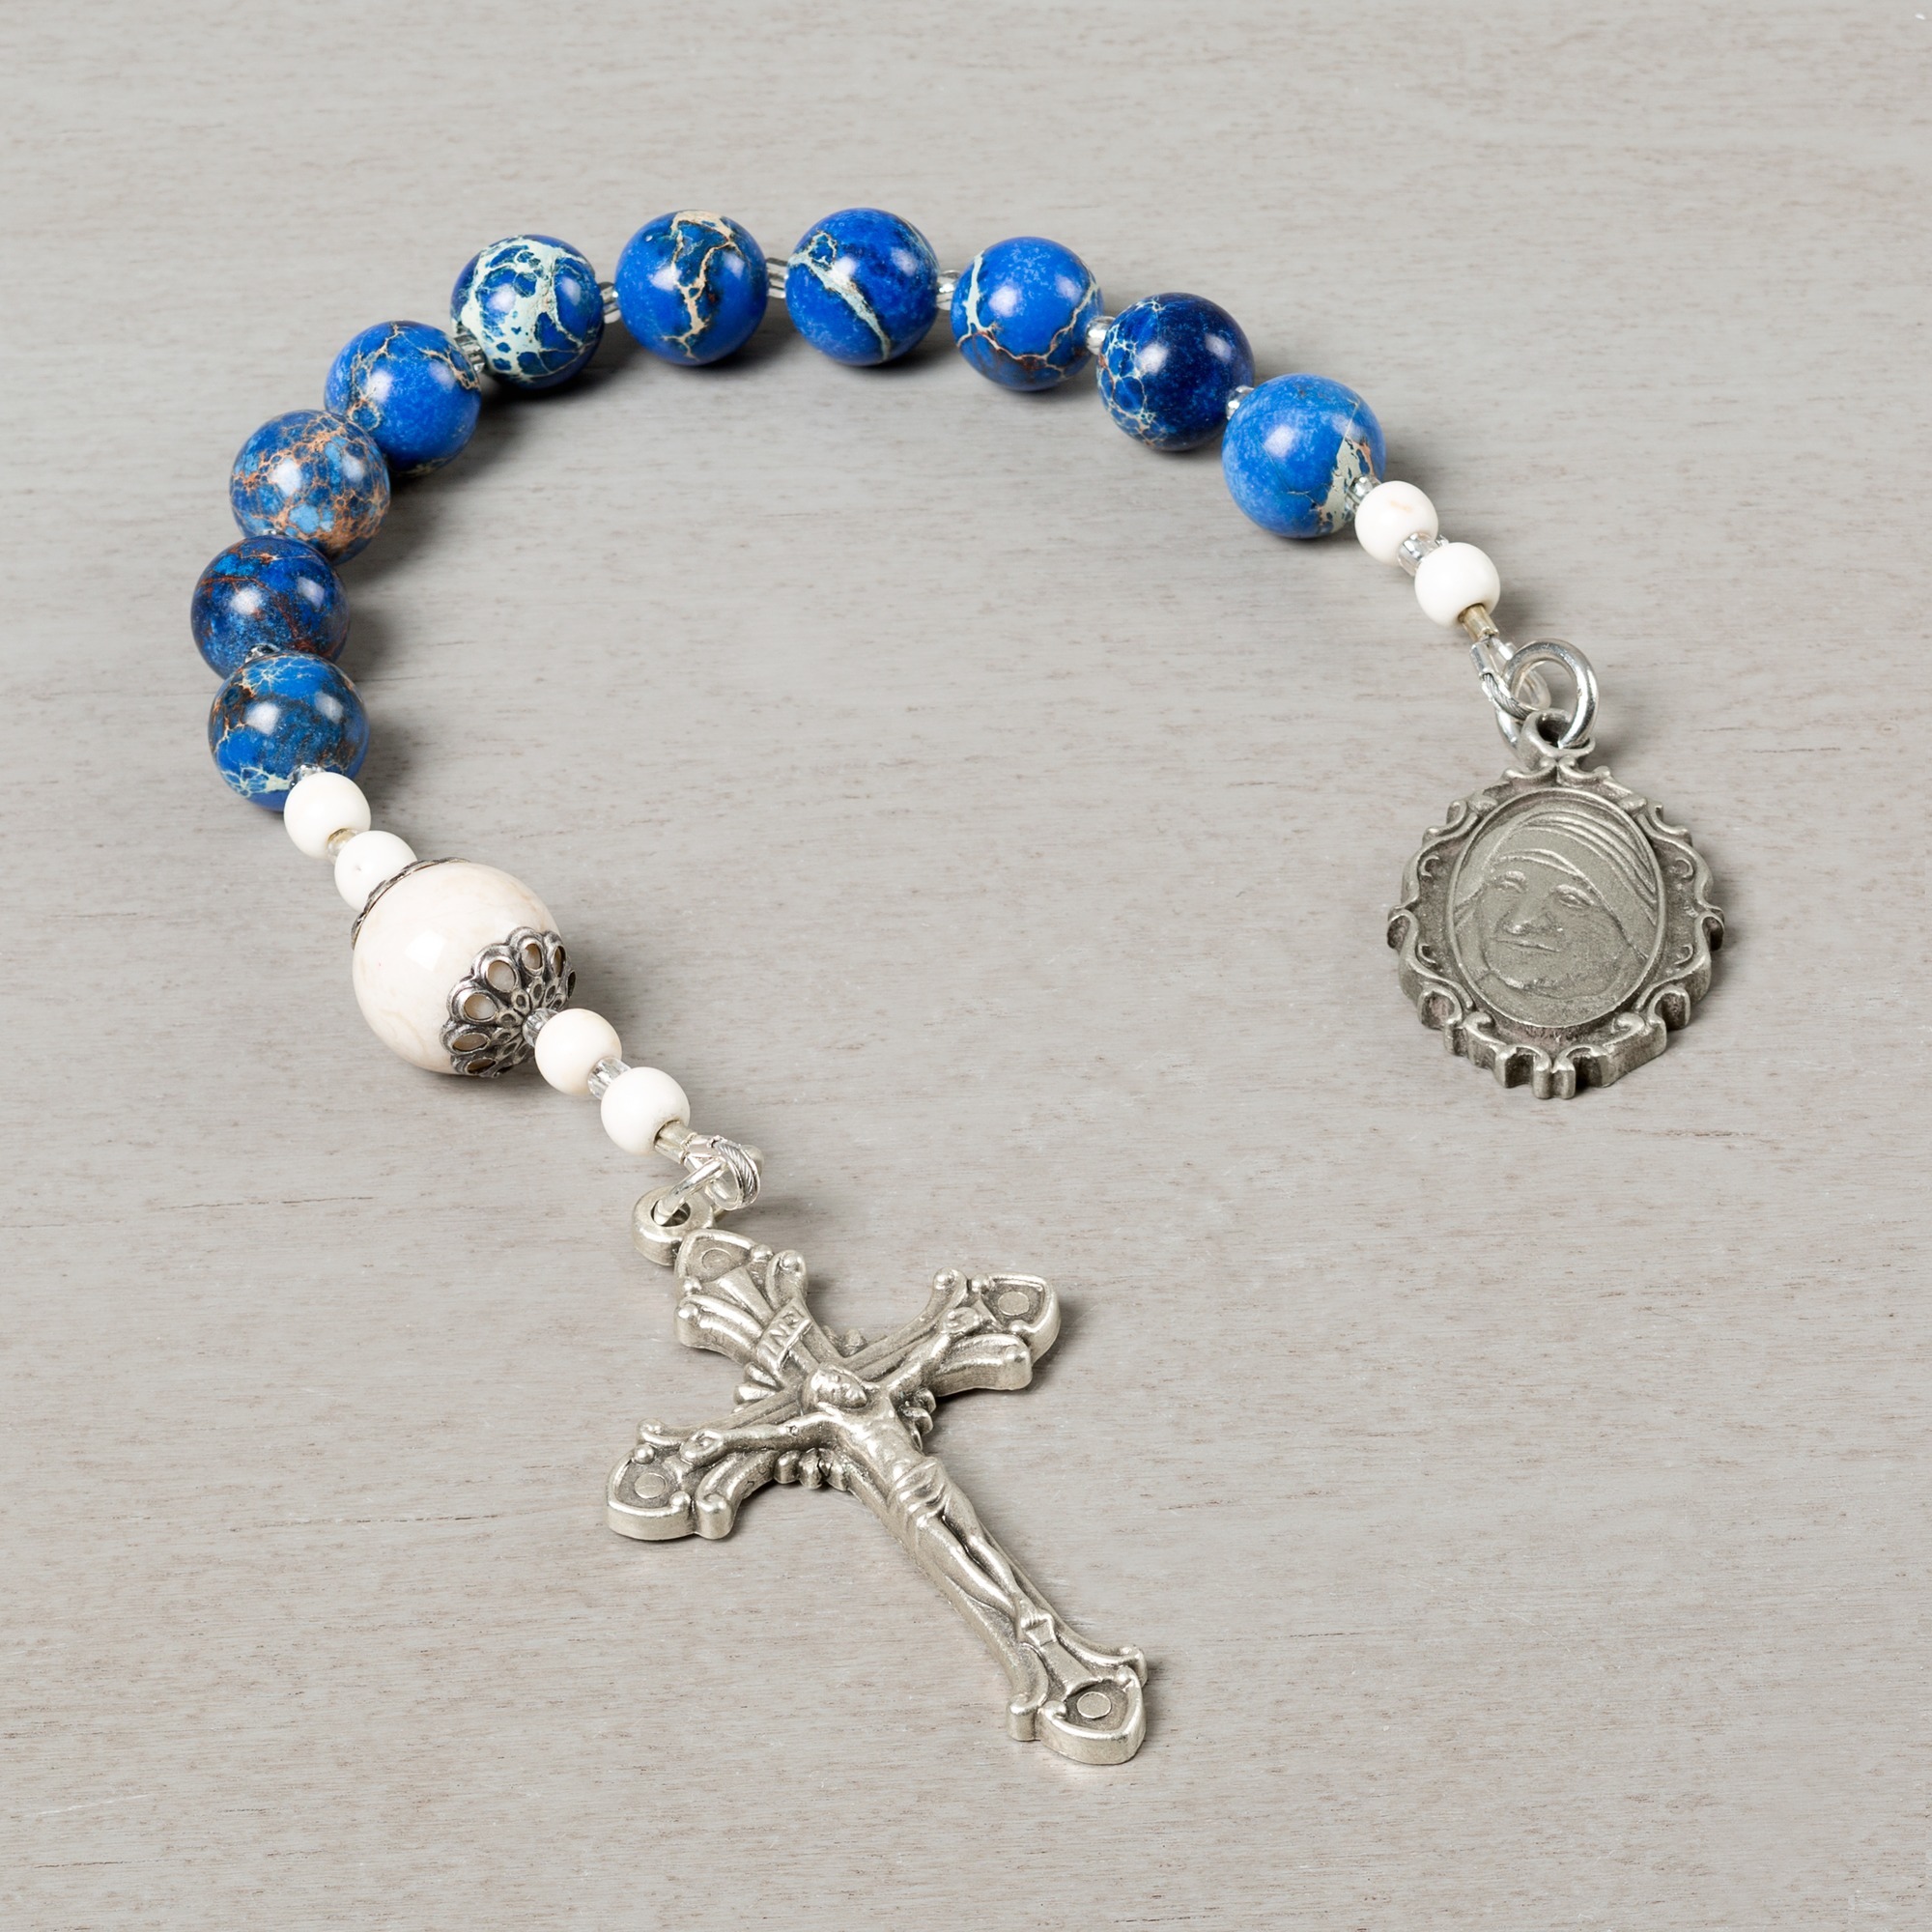 7 1/2 Inch November Birth Month Bead Rosary Bracelet with Patron Saint Petite Charm 